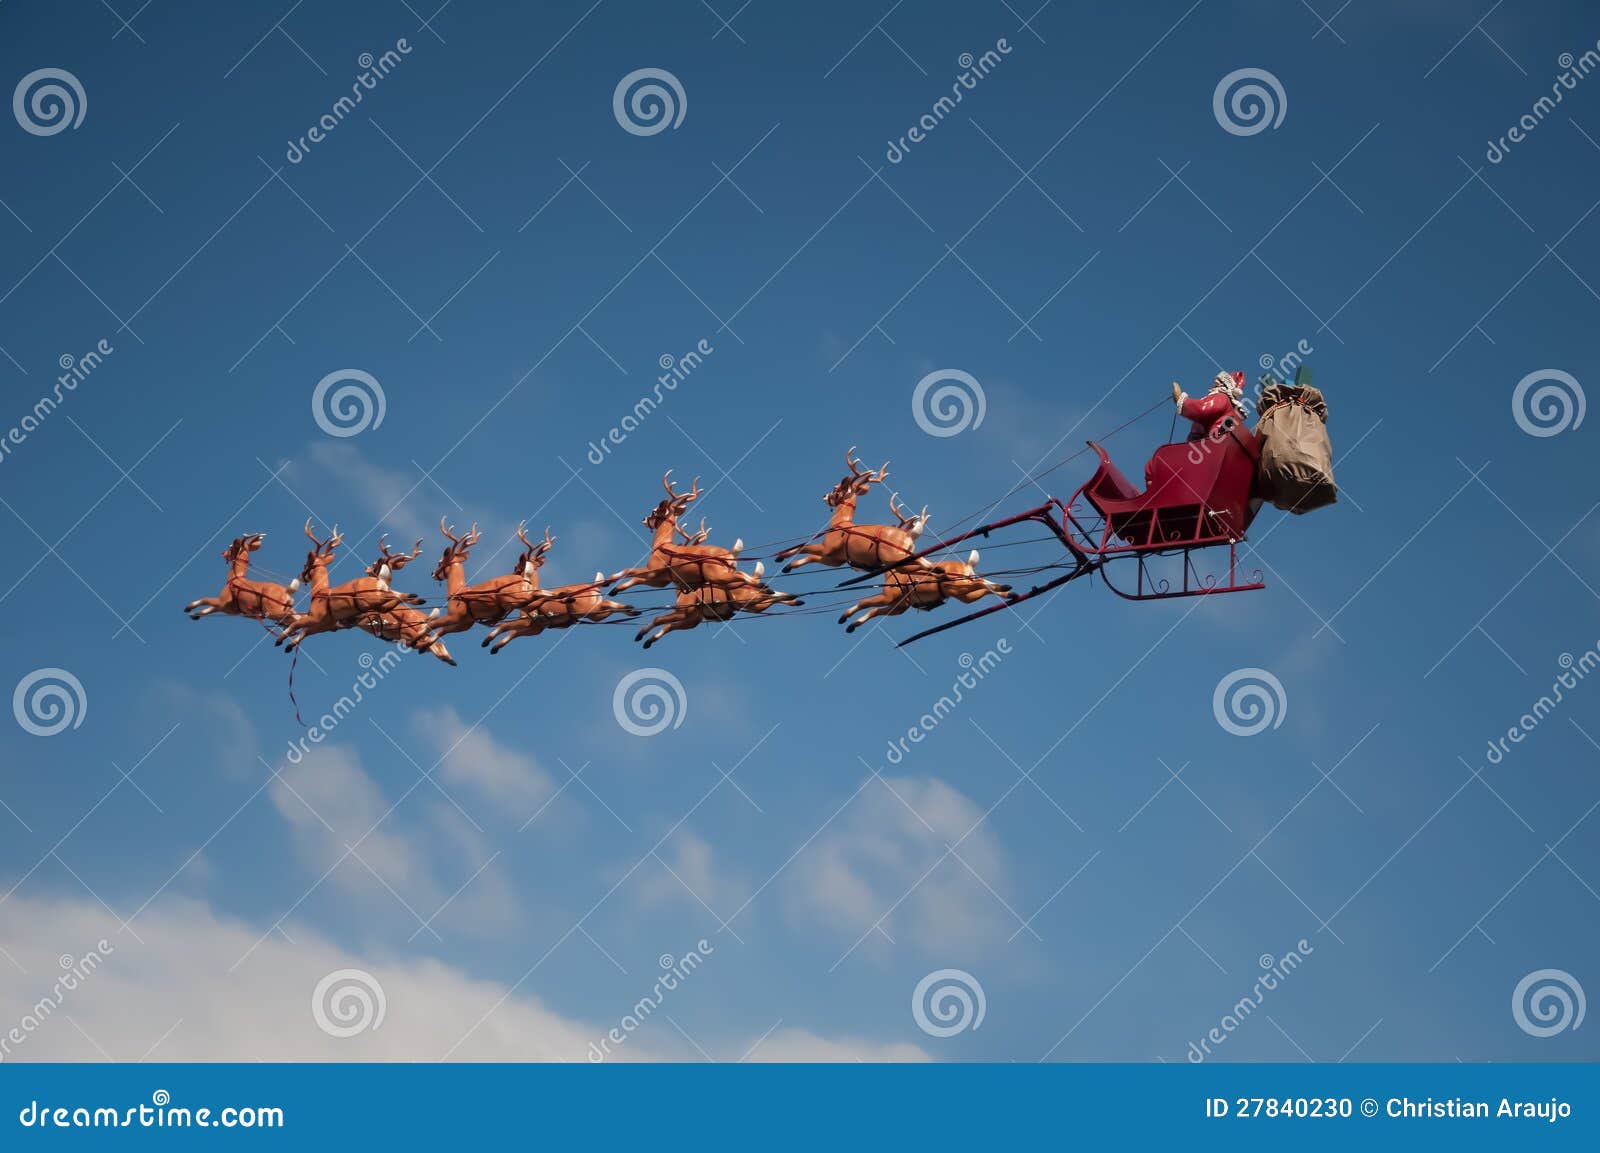 santa's sleigh